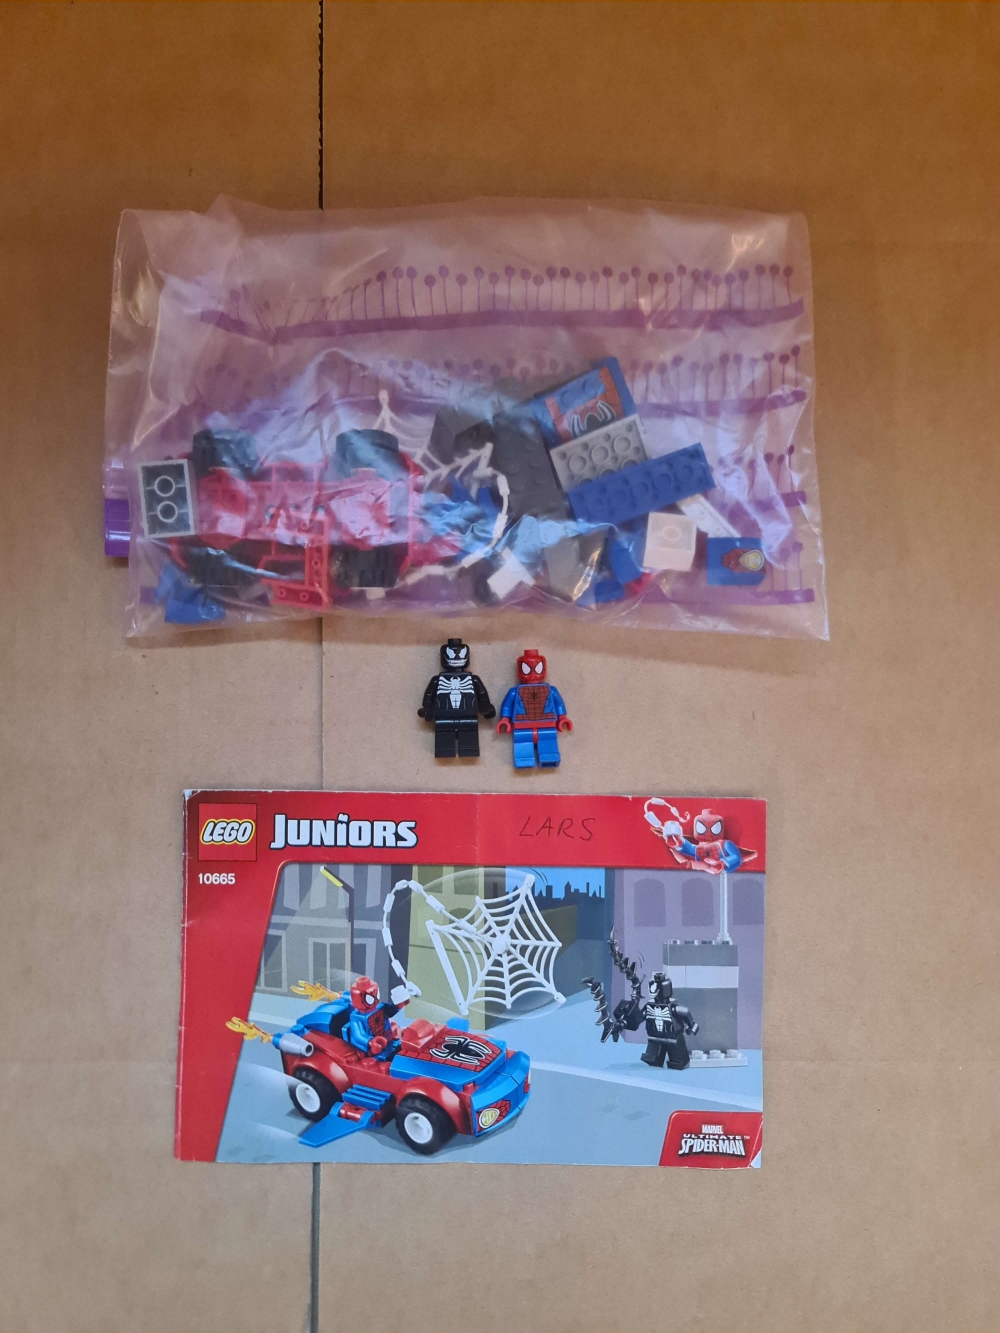 Sett 10665 fra Lego Juniors : Super heroes serien.

Meget pent. Komplett med manual. 